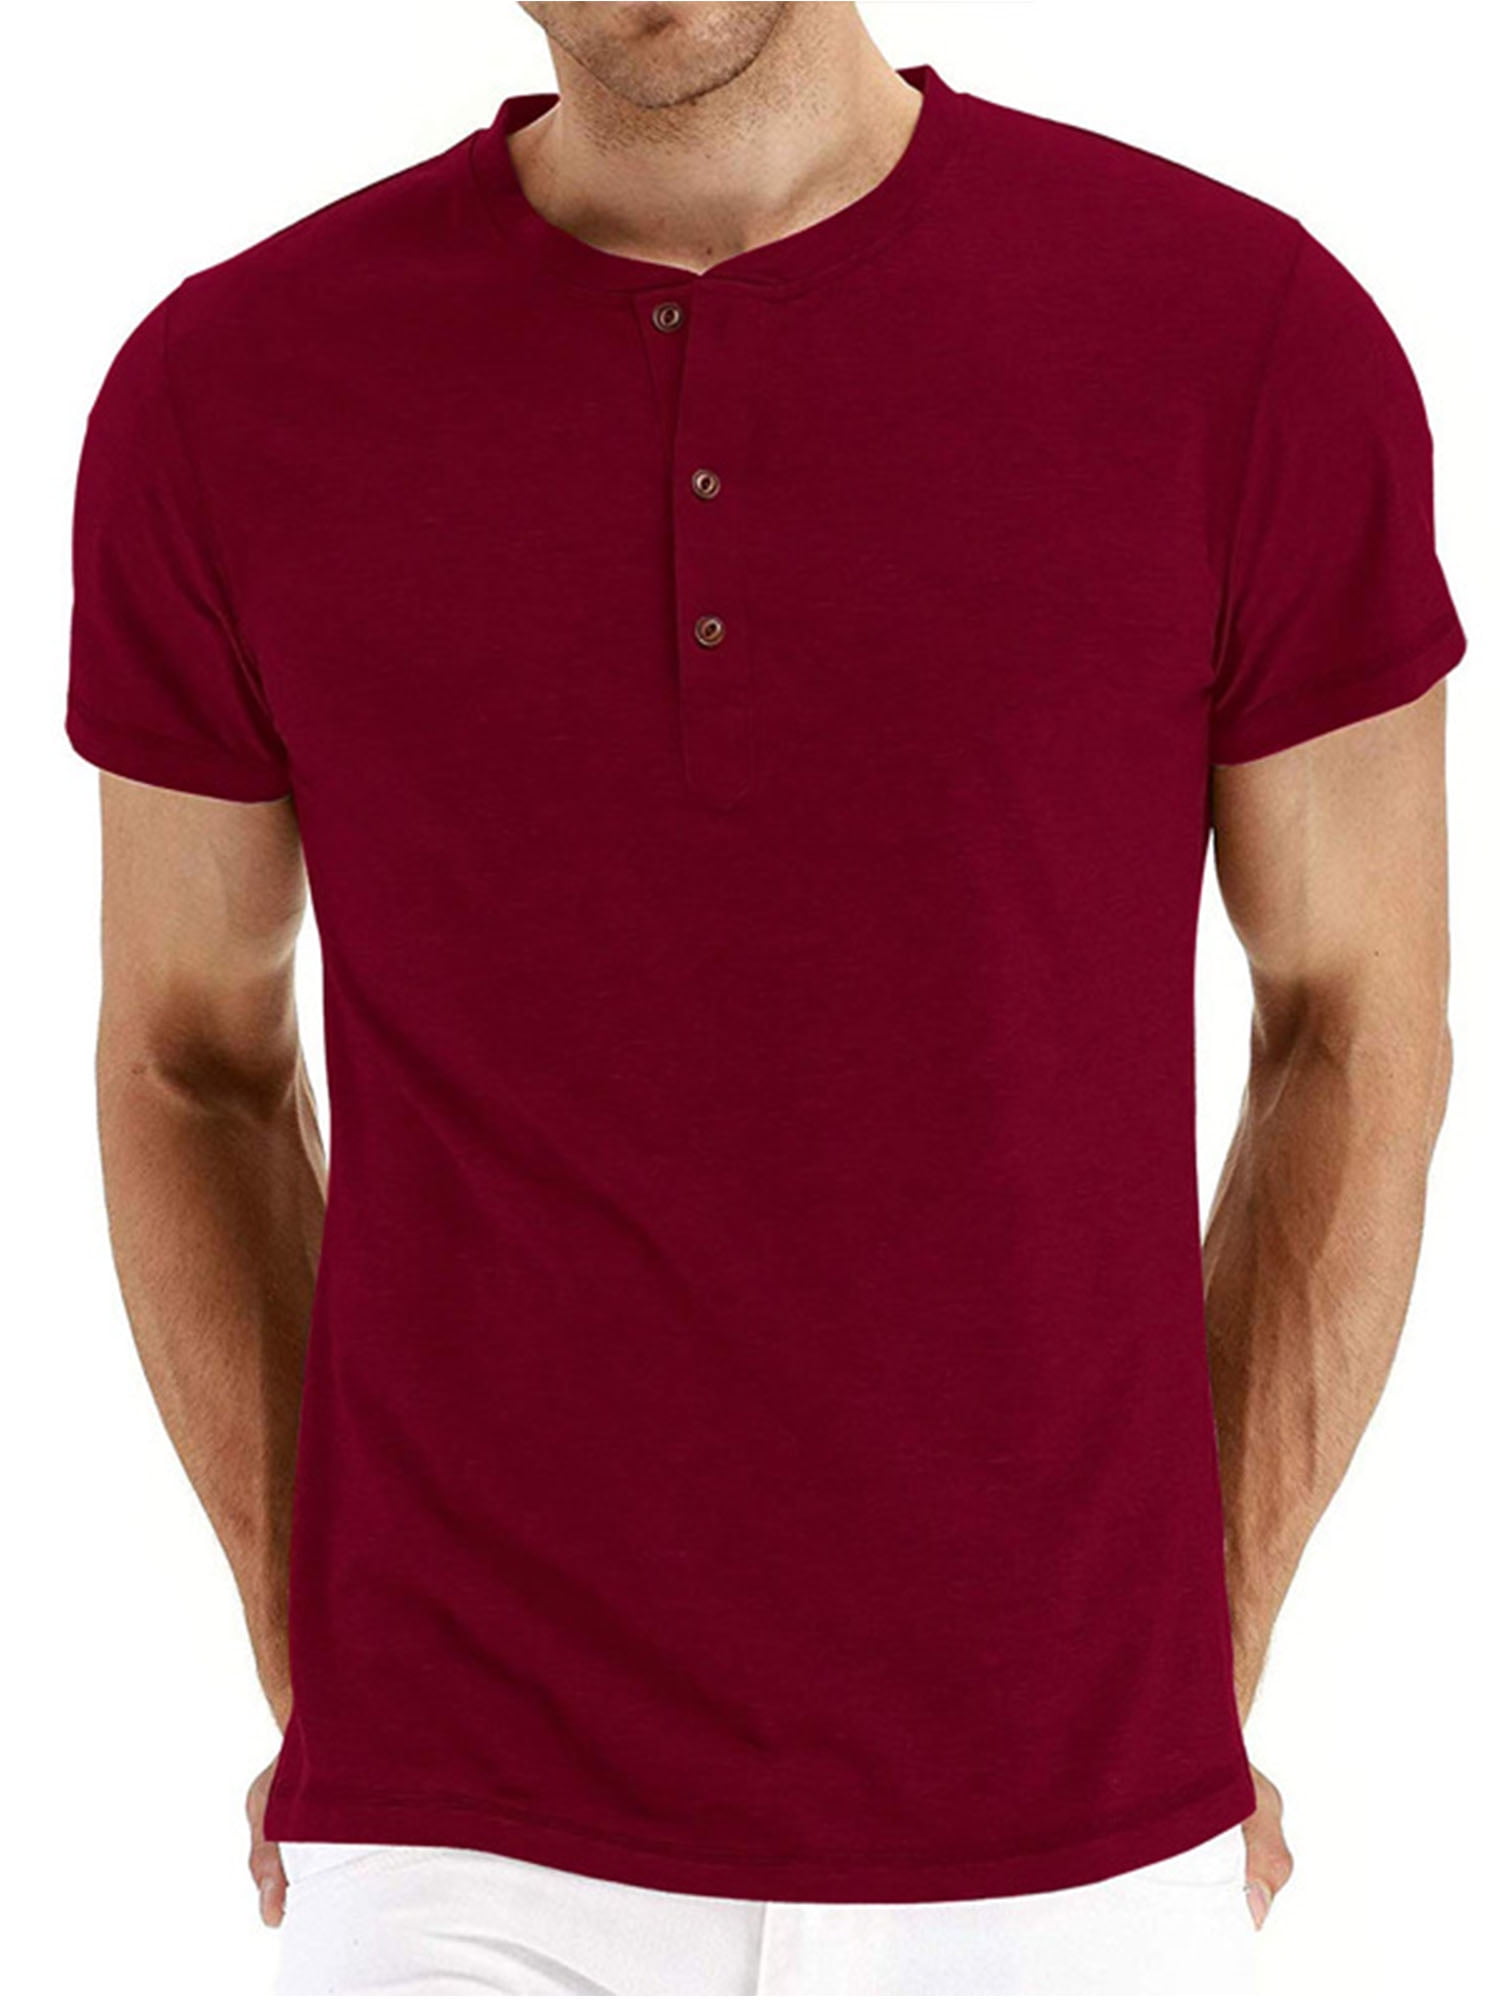 Zulmuliu Mens T-Shirt,Summer Short Sleeve Slim Fit V-Neck T-Shirt Casual Blouse for Boy